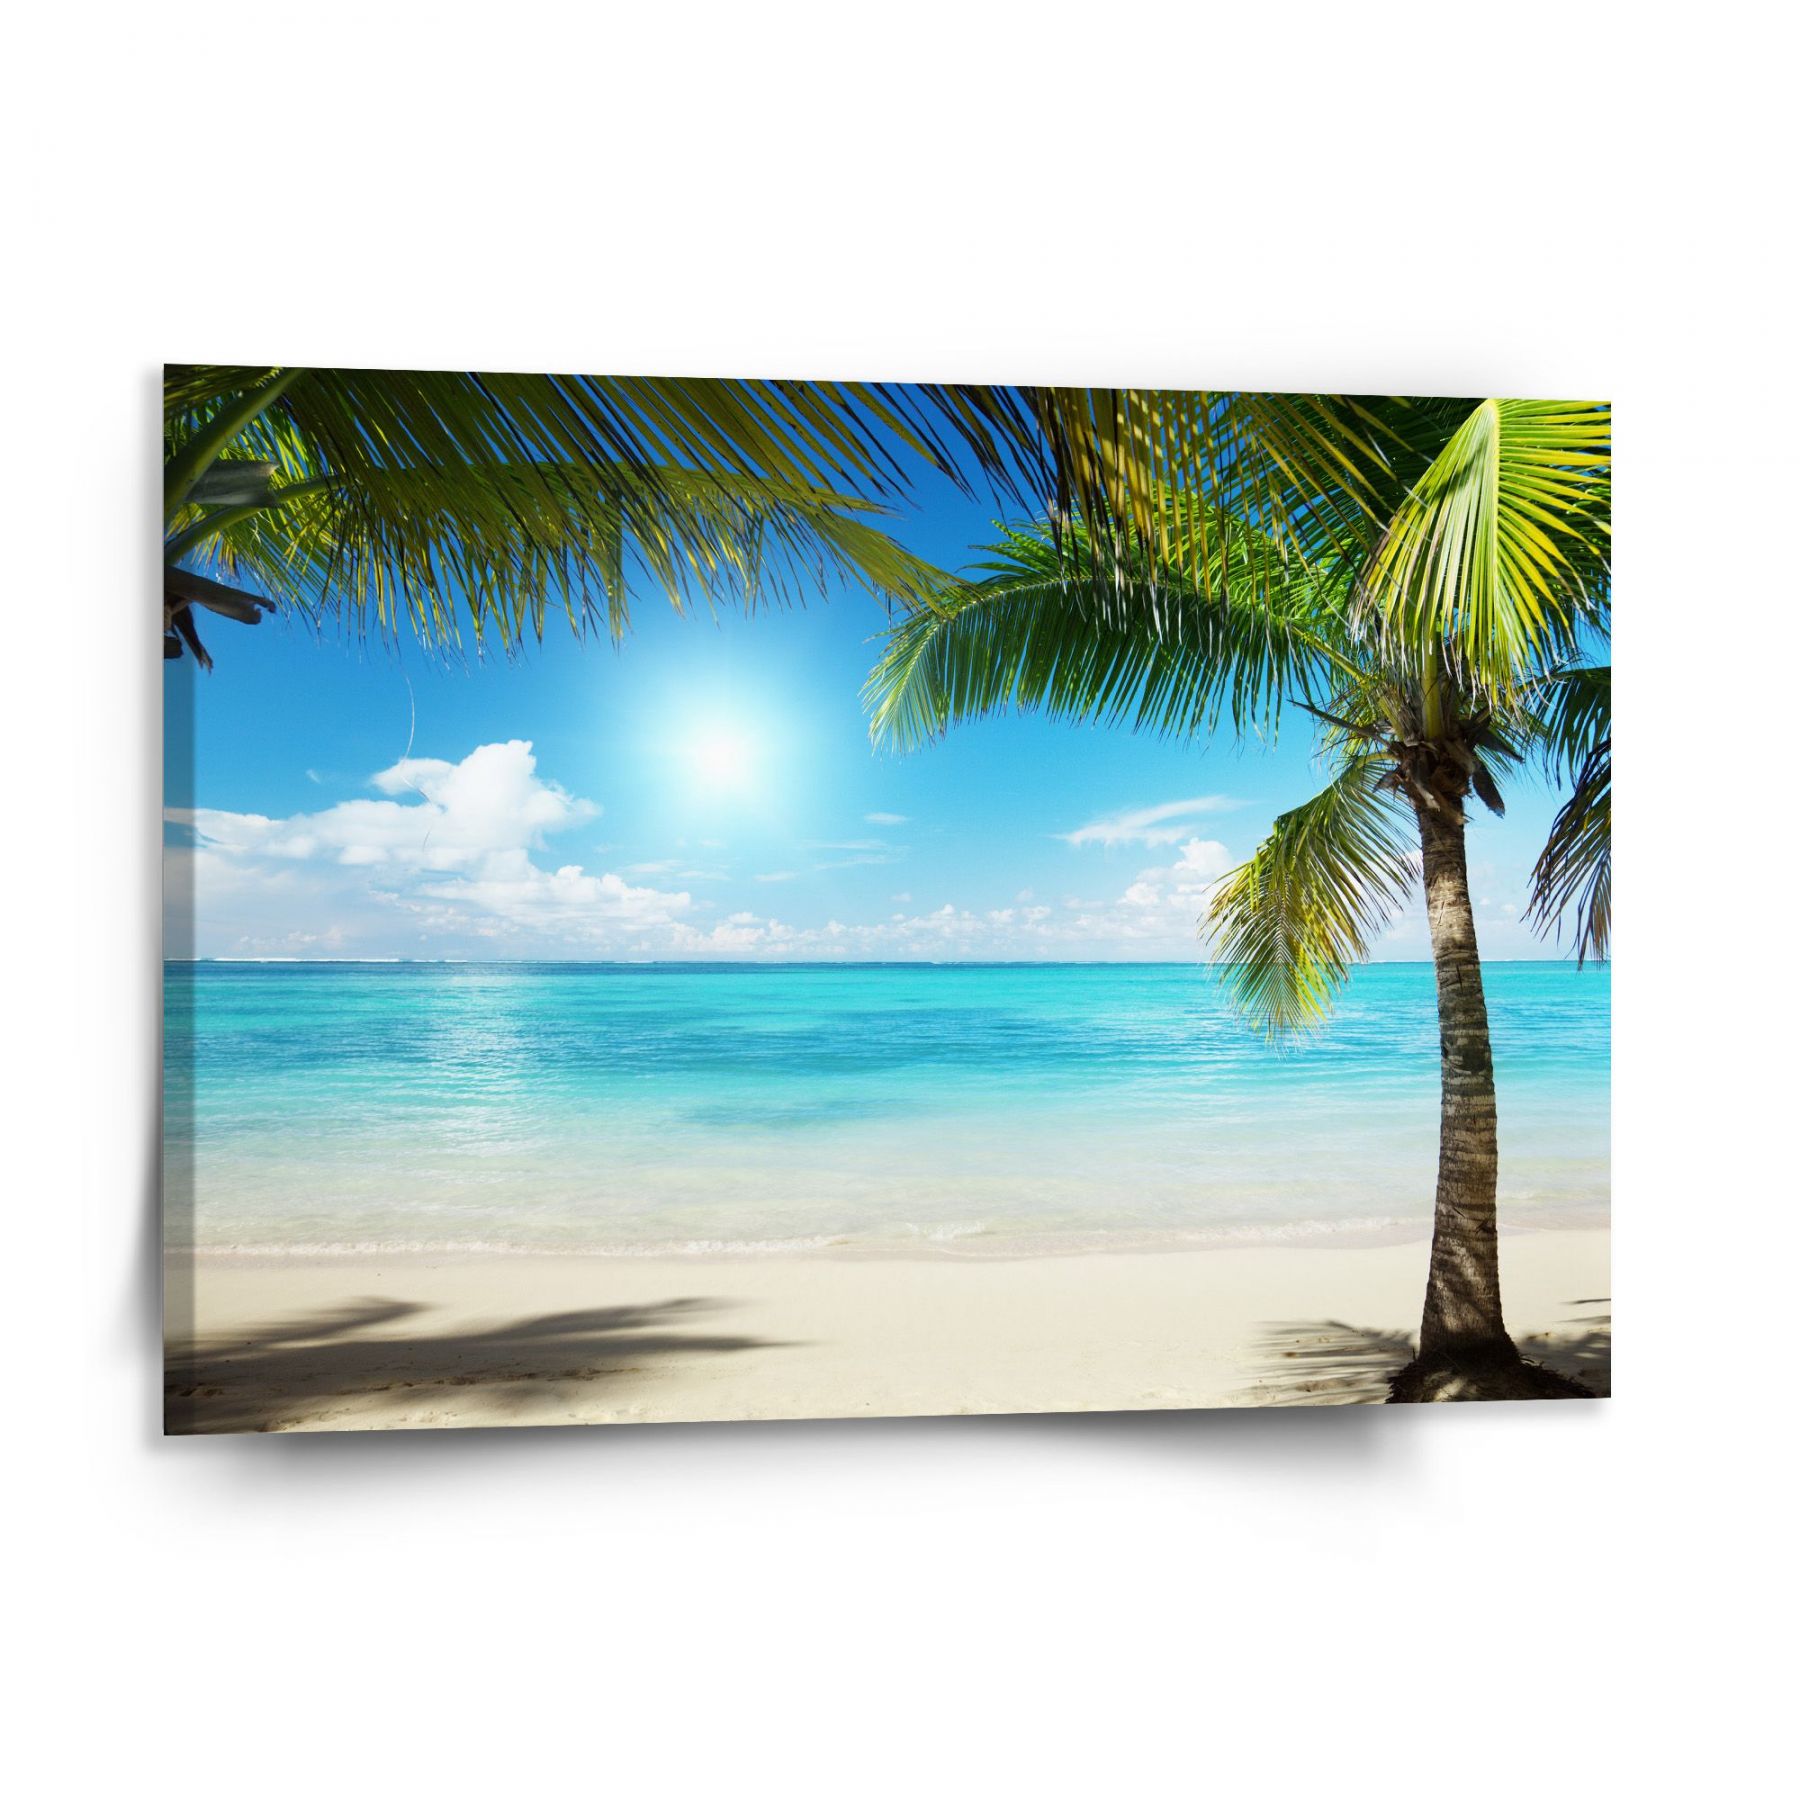 Obraz SABLIO - Pláž s palmami 150x110 cm - E-shop Sablo s.r.o.